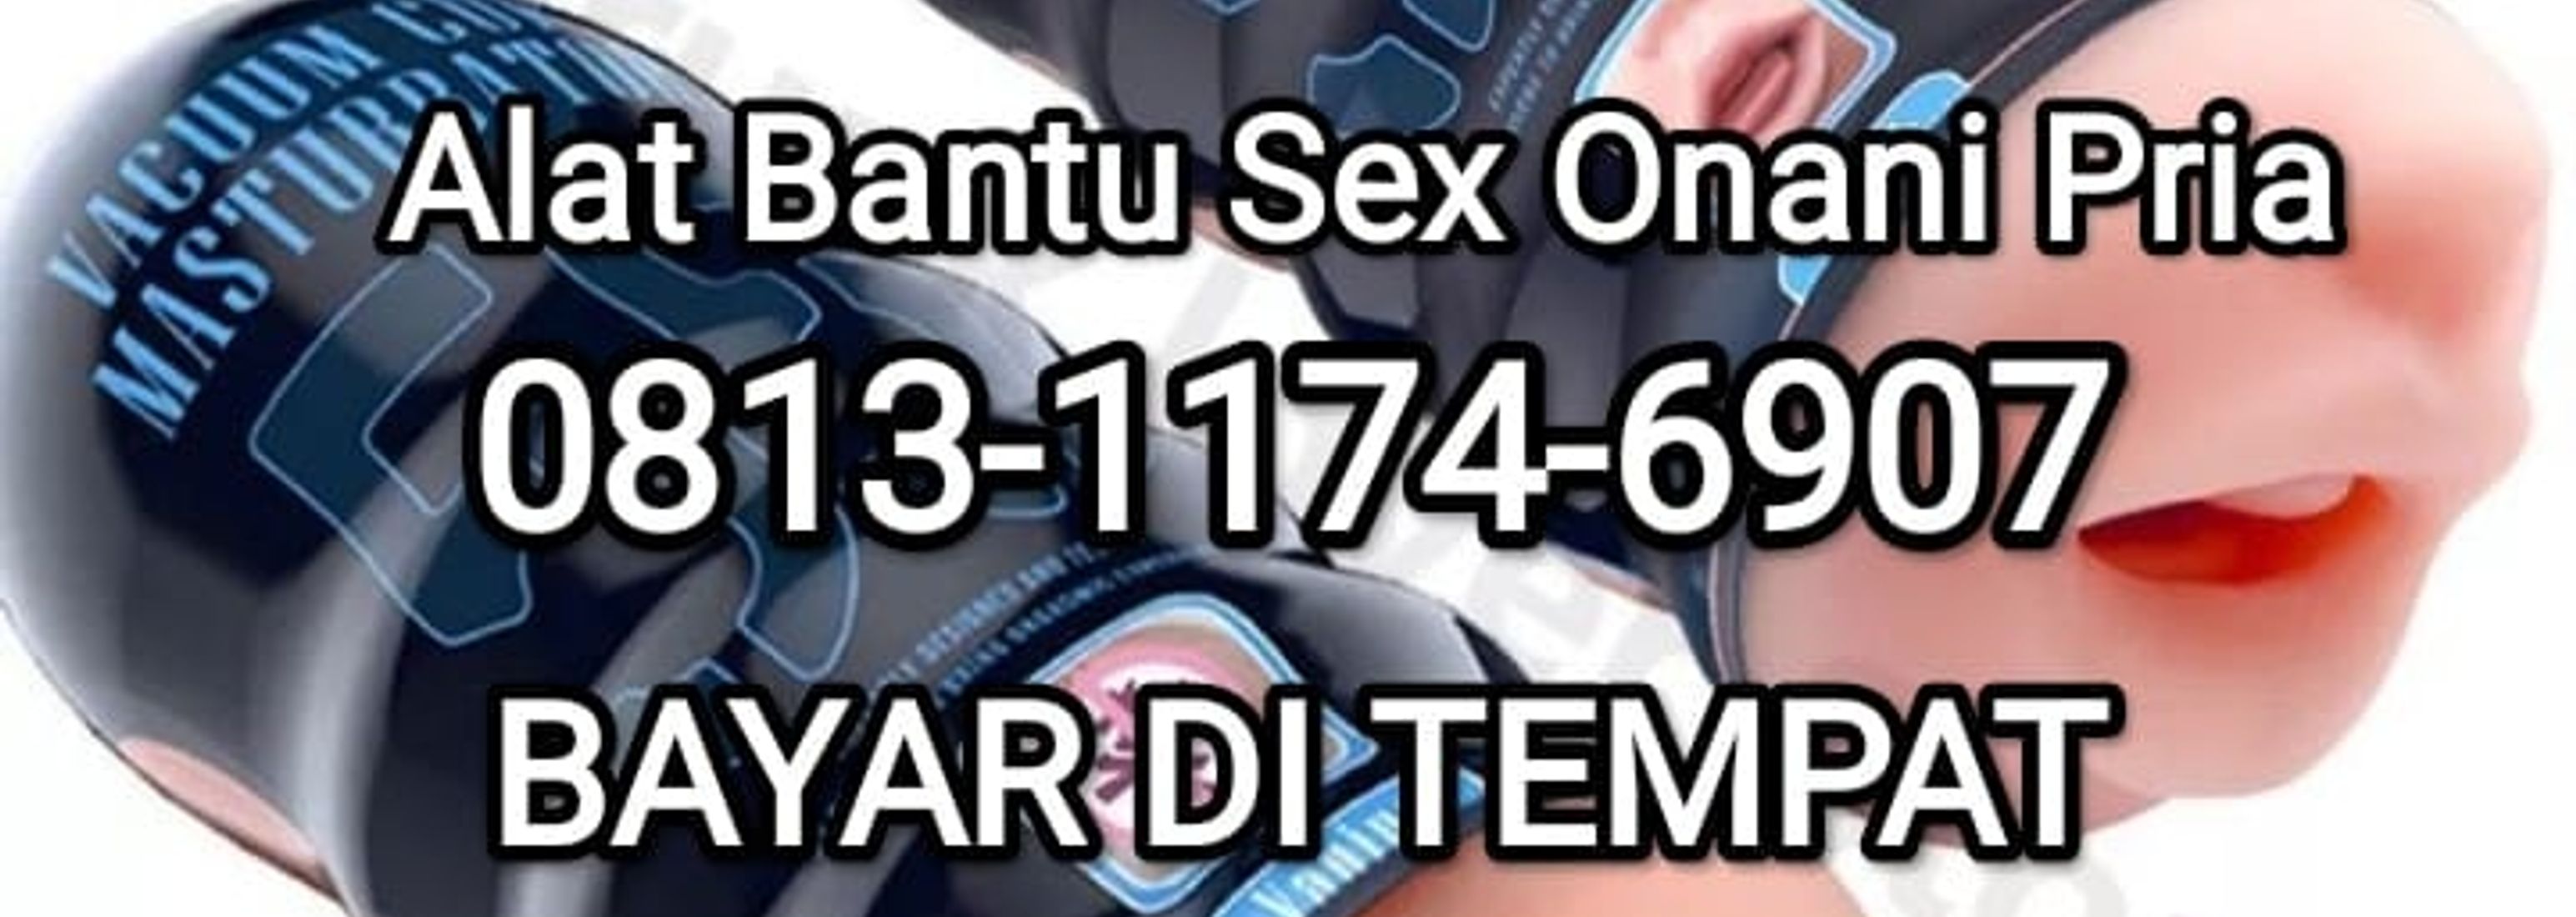 Jual Alat Bantu Sex Onani Pria Di Sulawesi 081311746907 Bisa Lewat Kurir Jobs And Projects The Dots 6311